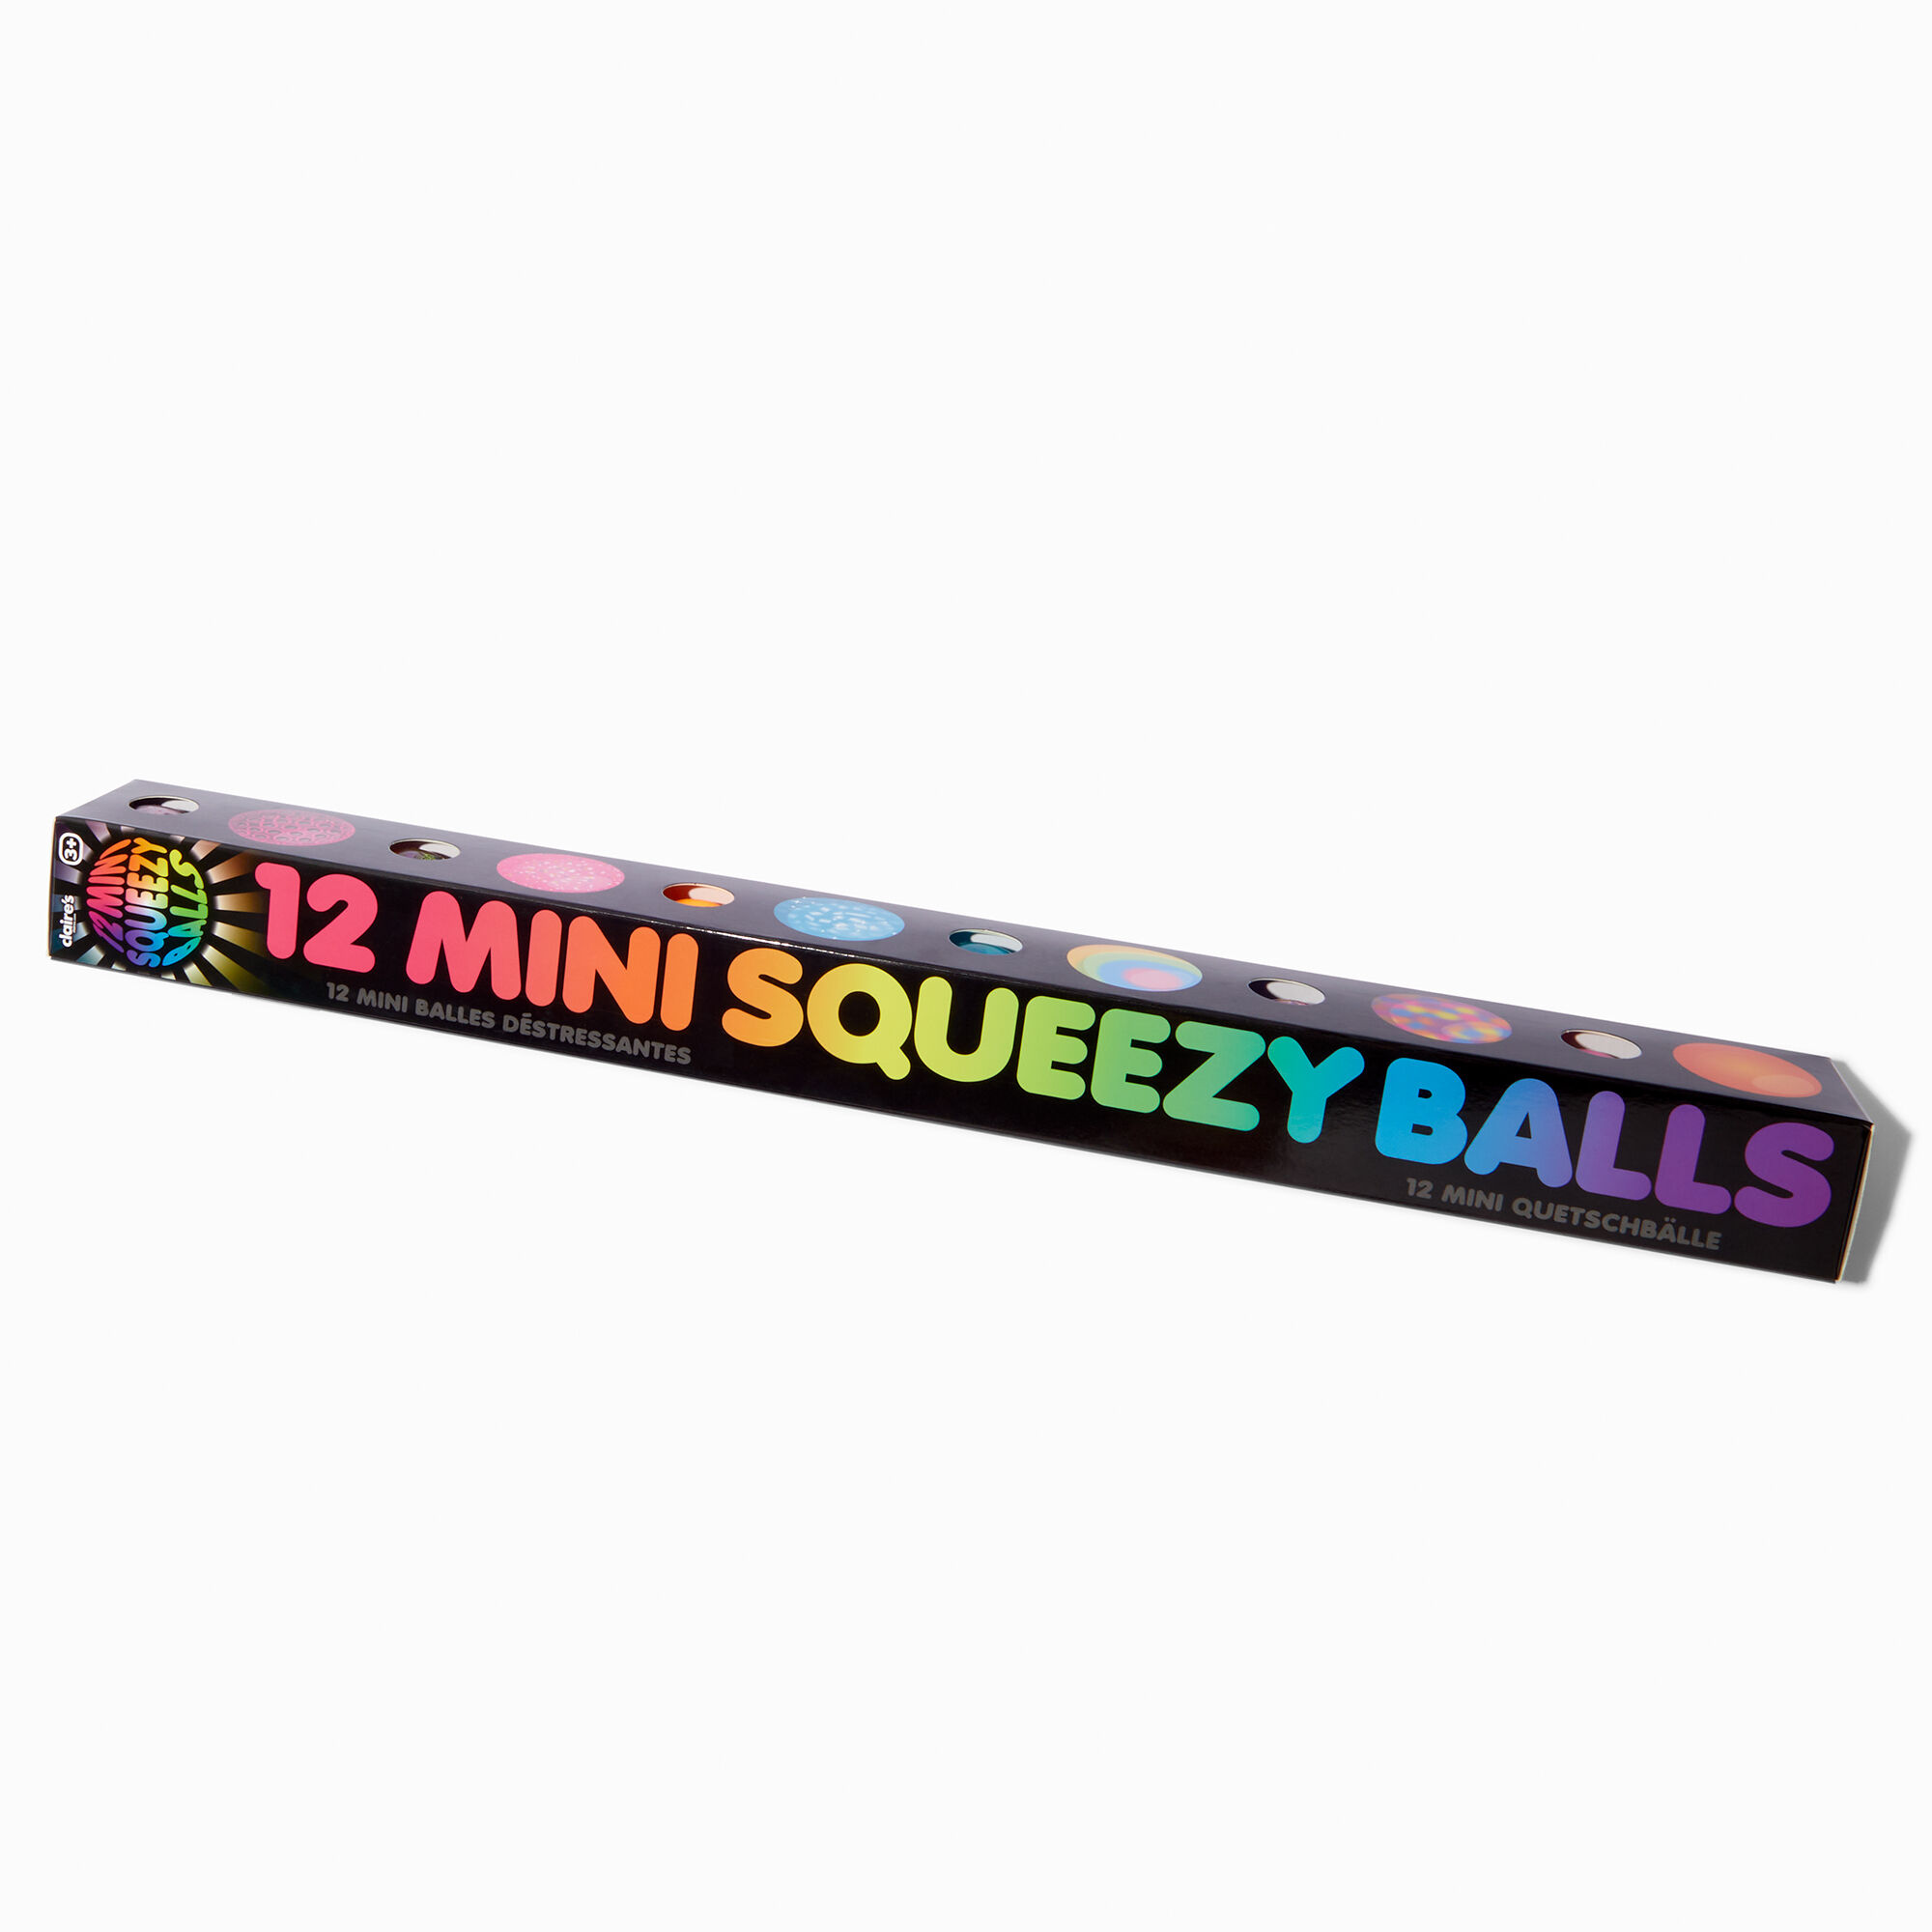 View Claires Mini Squeezy Balls Fidget Toy 12 Pack information